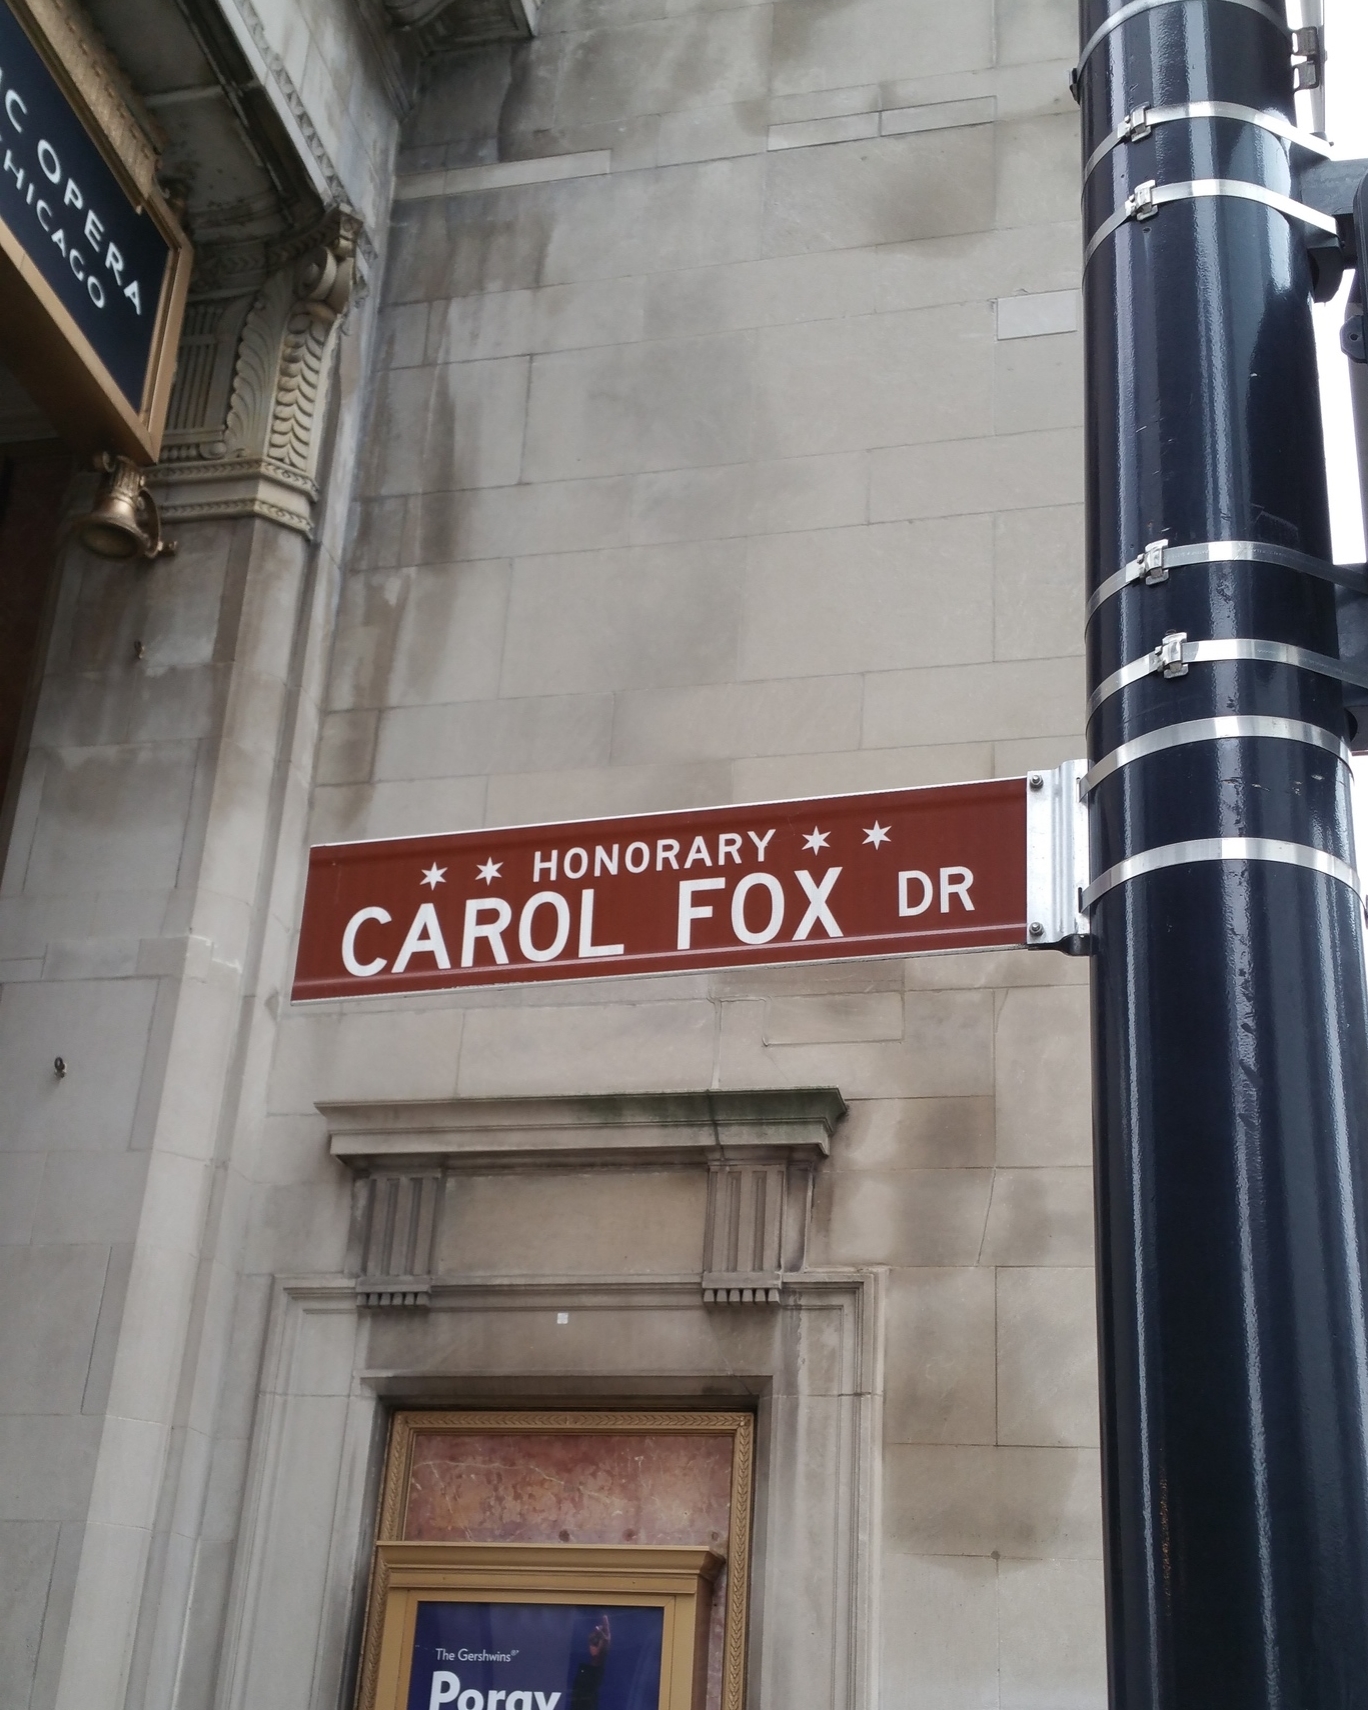 Carol Fox Dr - Honorary Chicago. Director of Lyric Opera Company